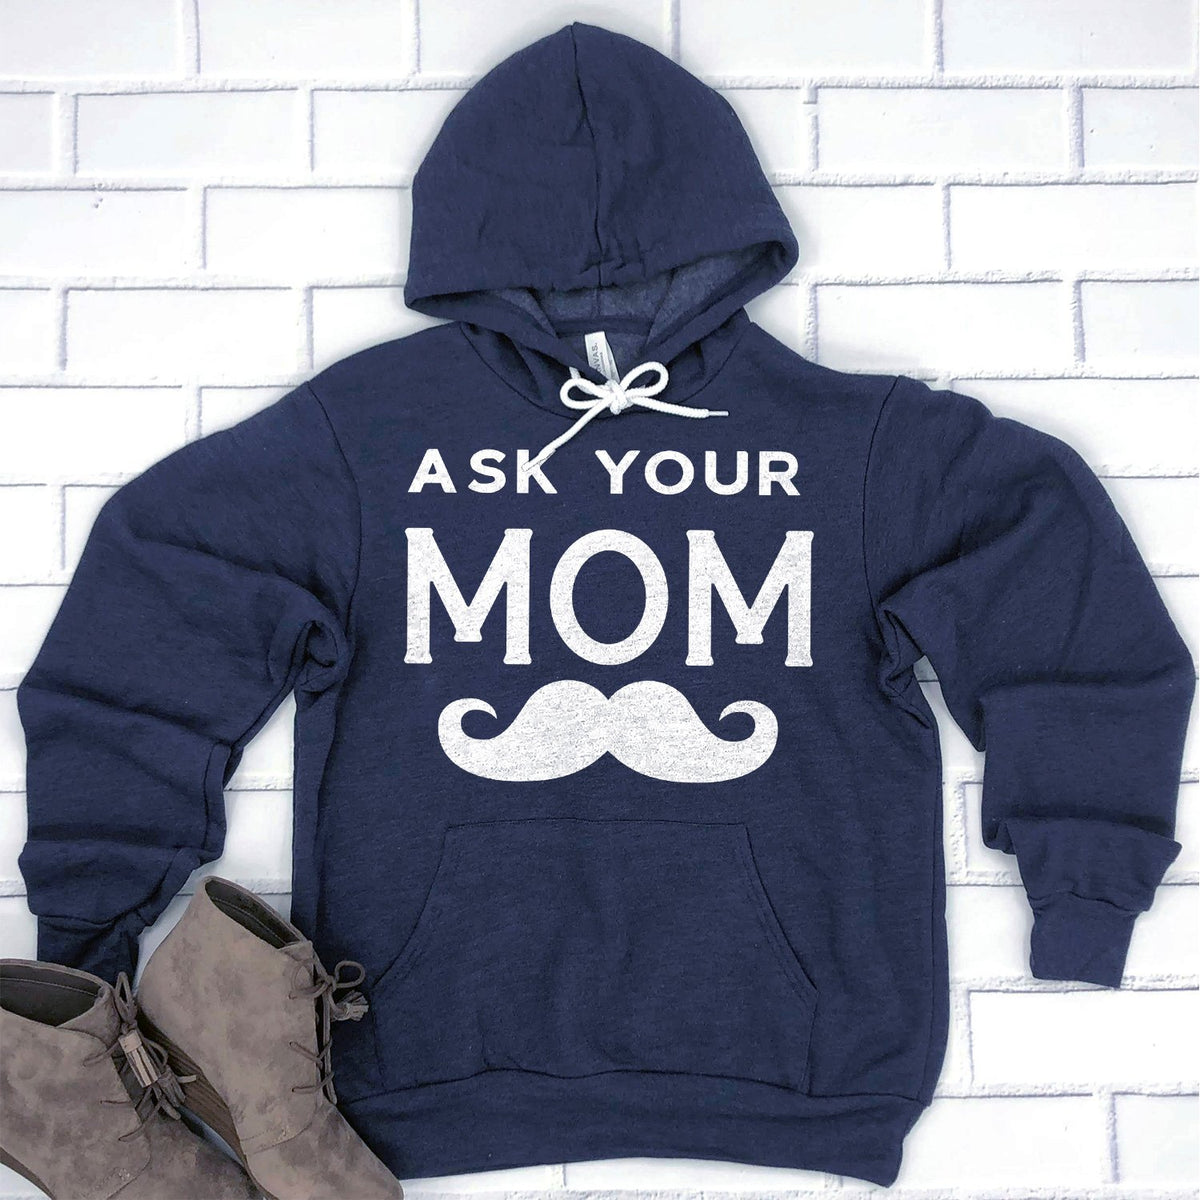 Ask Your Mom with Mustache - Hoodie Sweatshirt